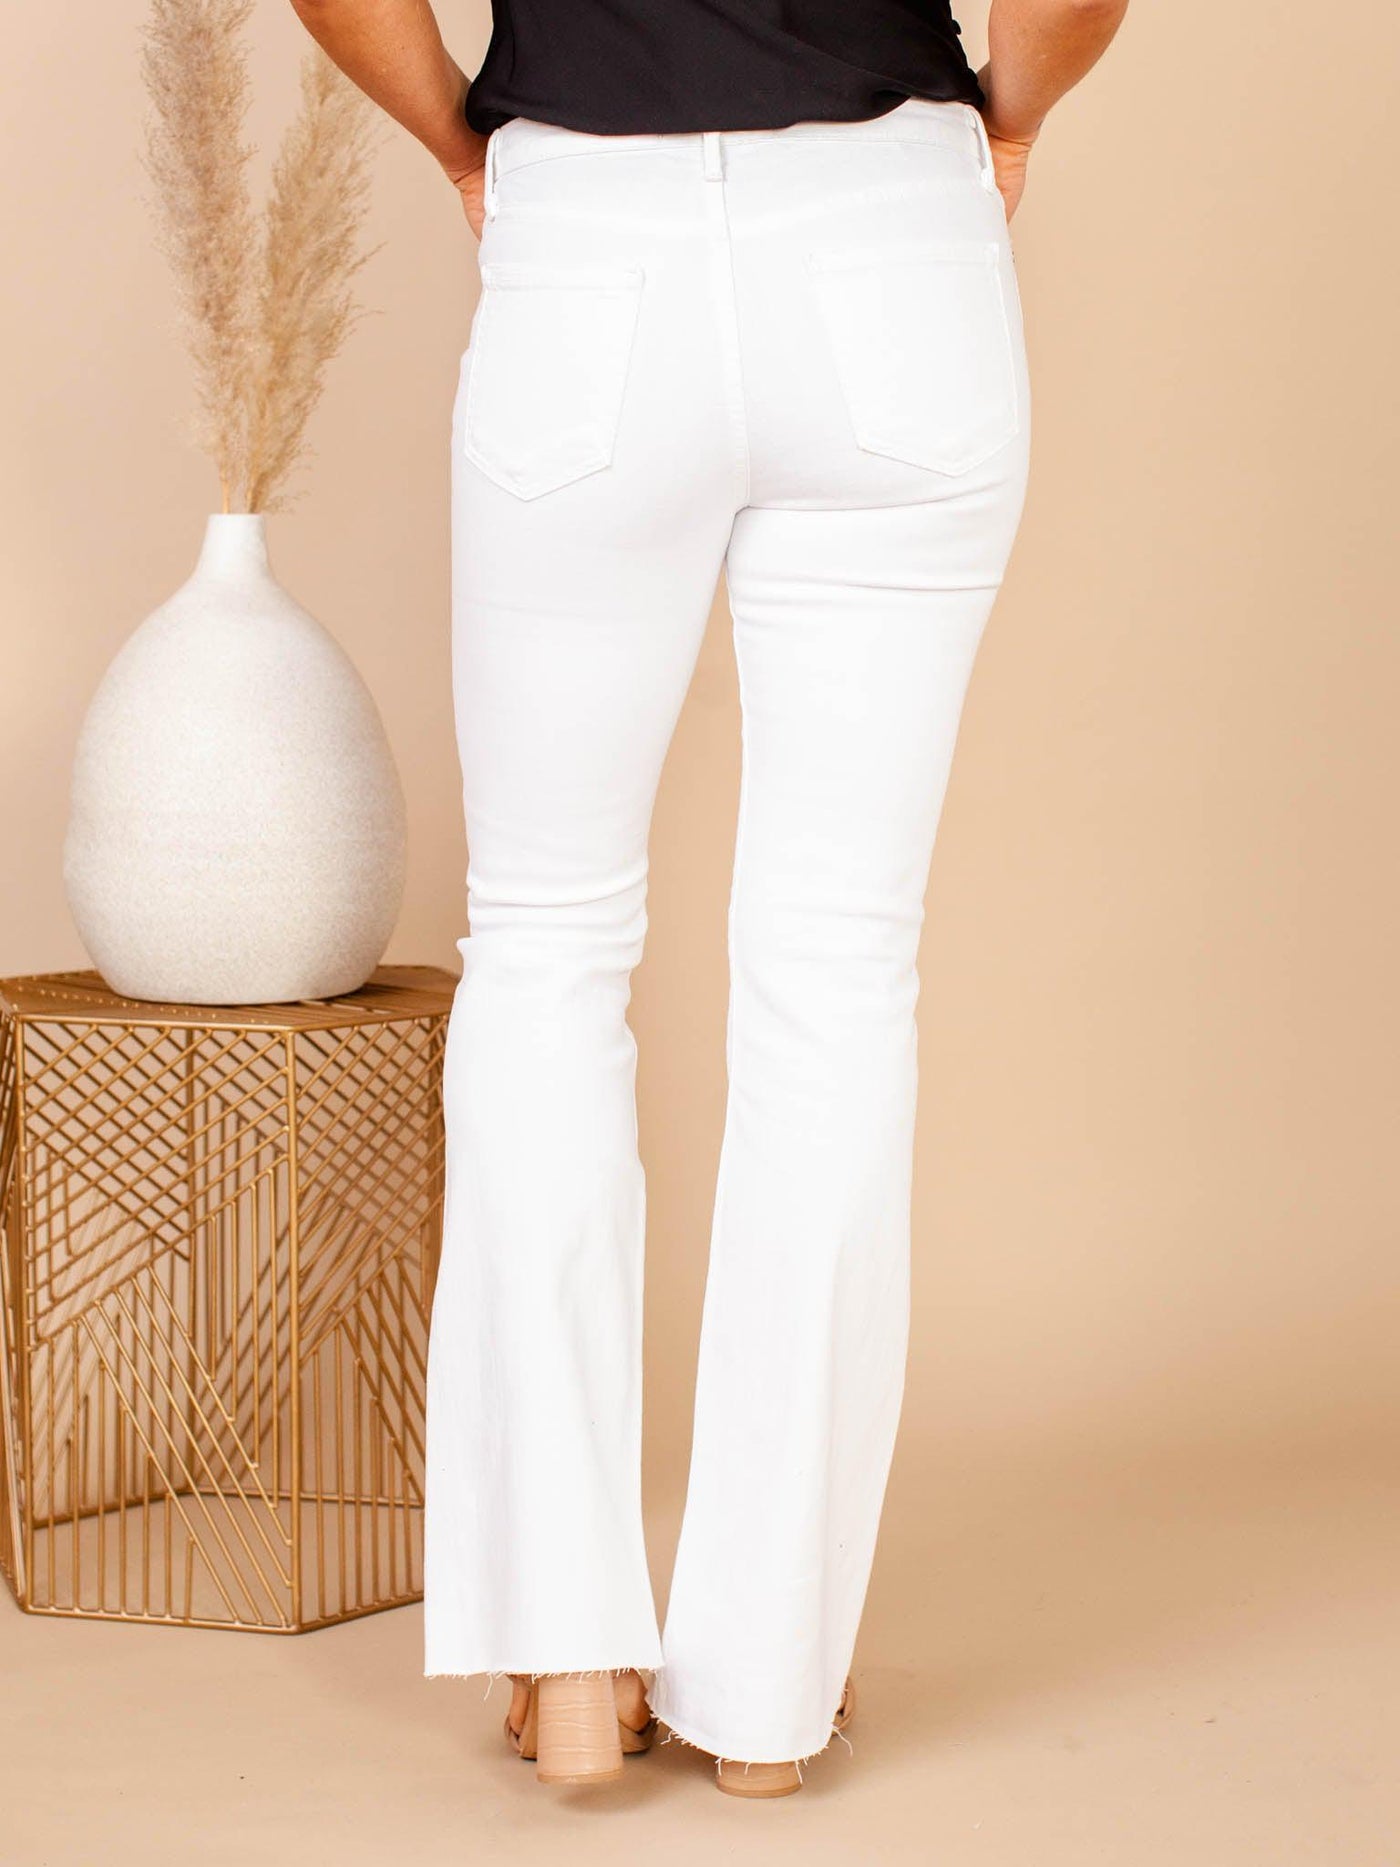 long white pant